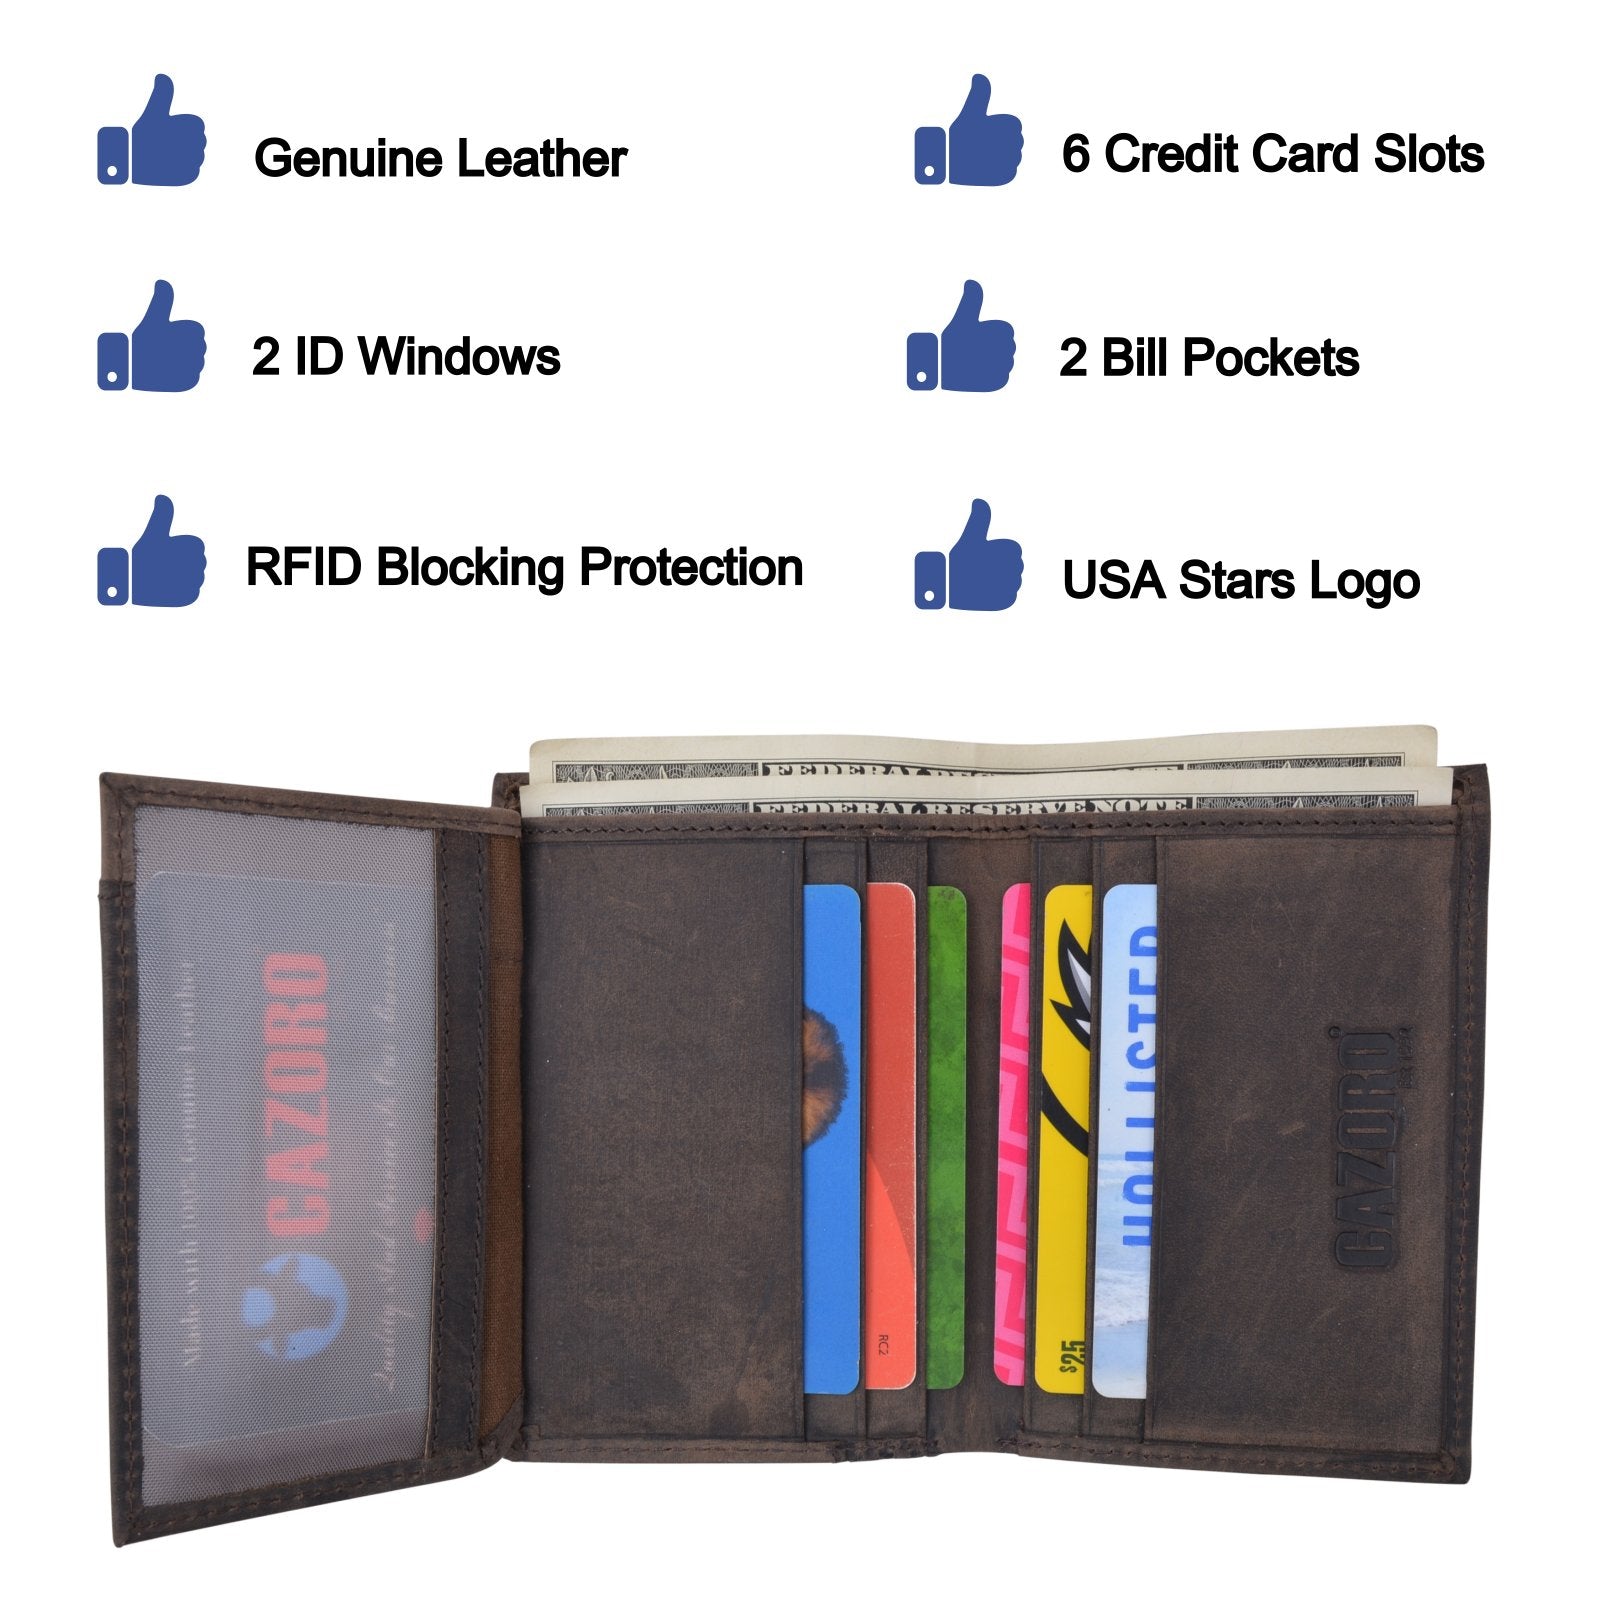 Large RFID Blocking Men's Bifold Leather Wallet Vertical Layout Black